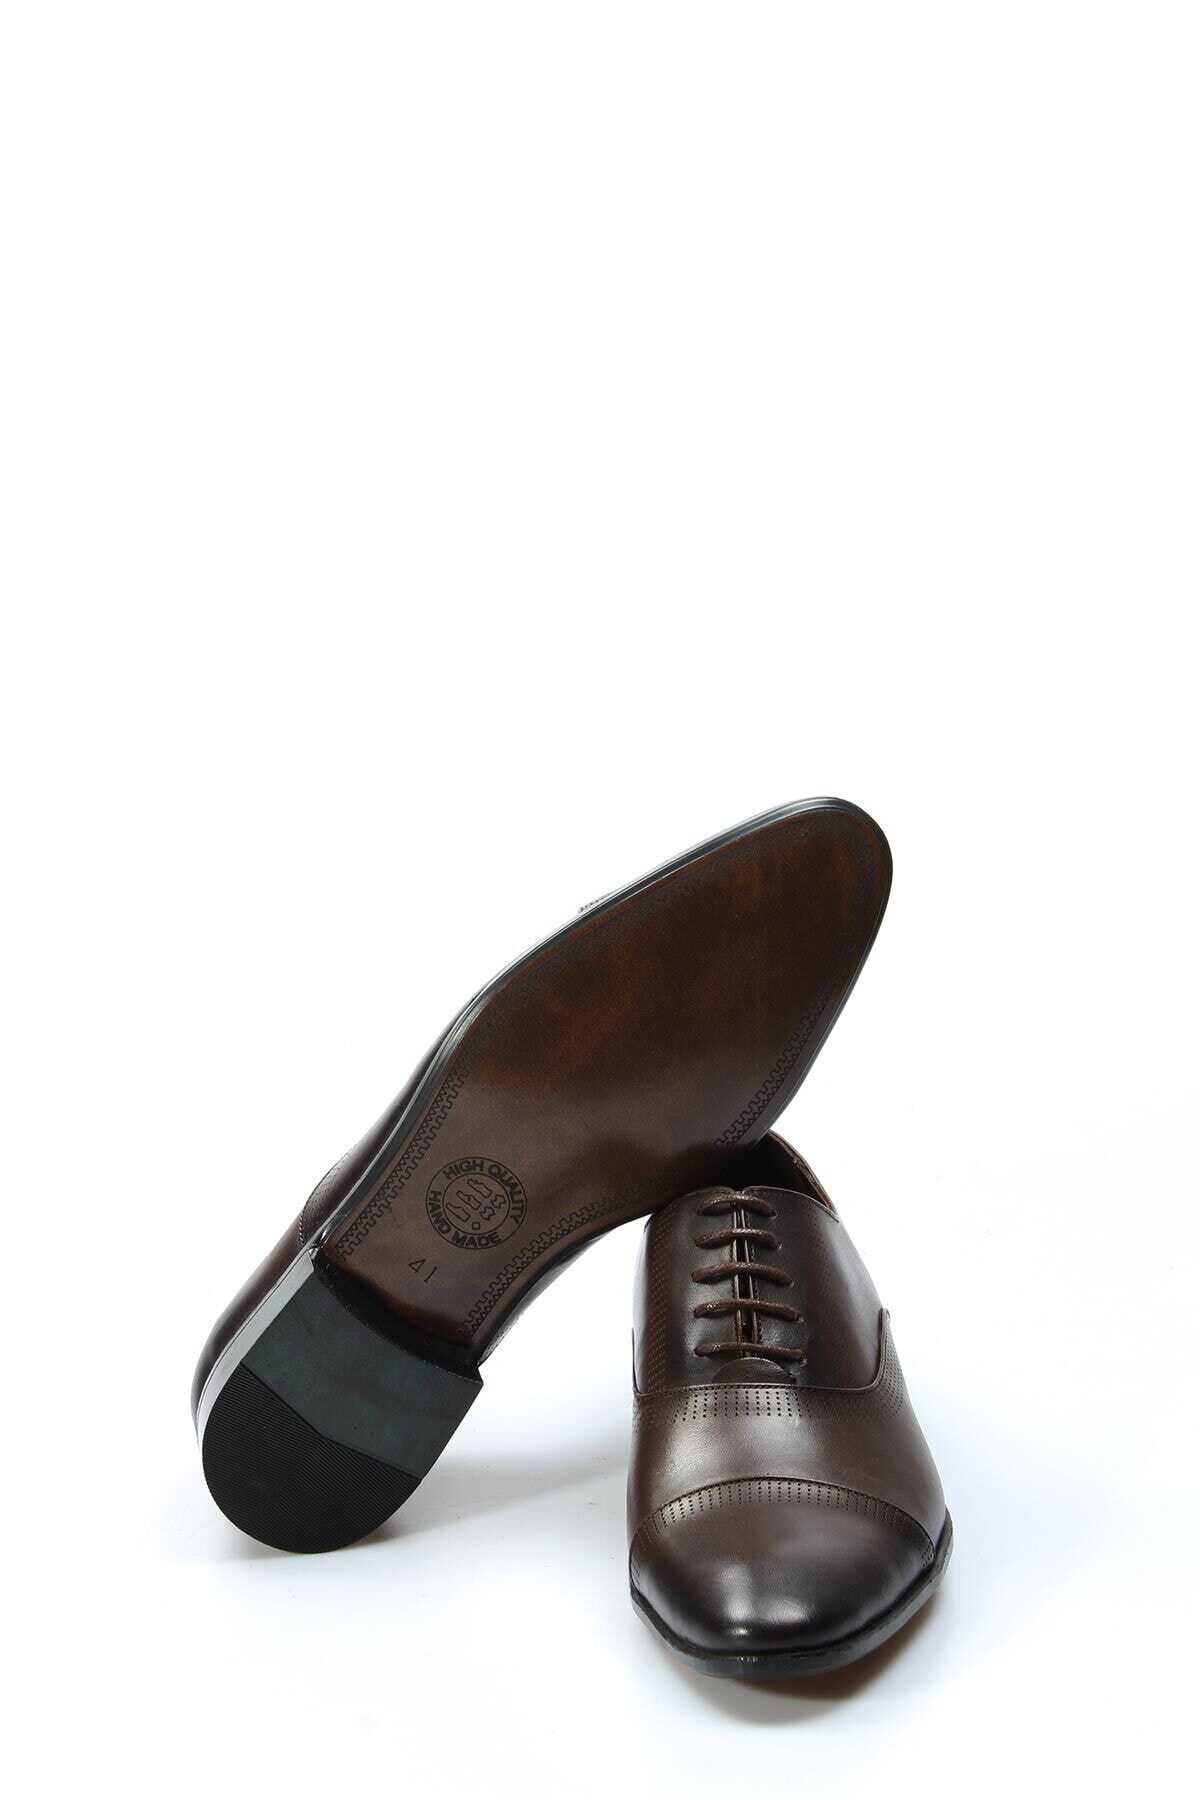 کفش کلاسیک چرم مردانه قهوه ای برند FAST STEP